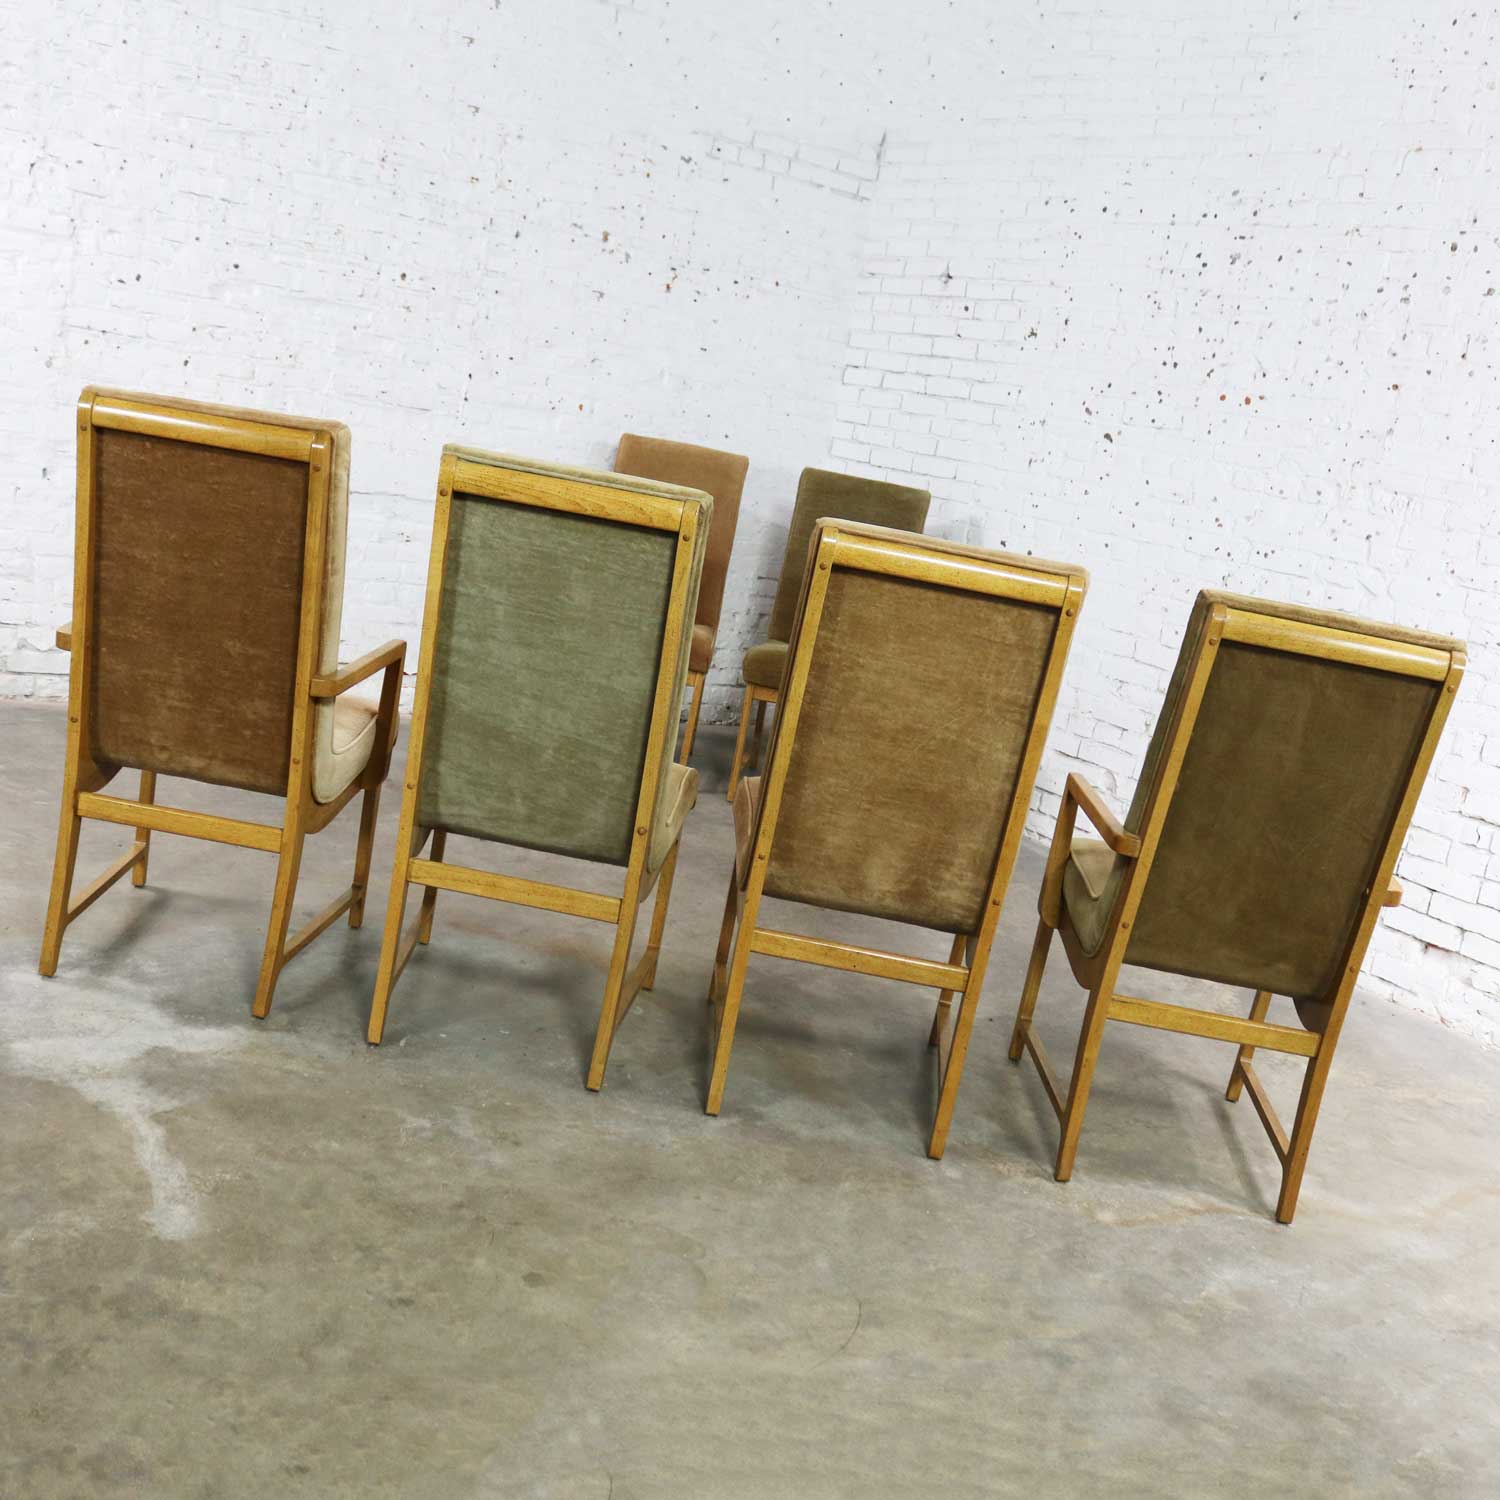 6 Modern Style Vintage Dining Chairs Velvet Scoop Seats Bernhardt Flair for Hibriten